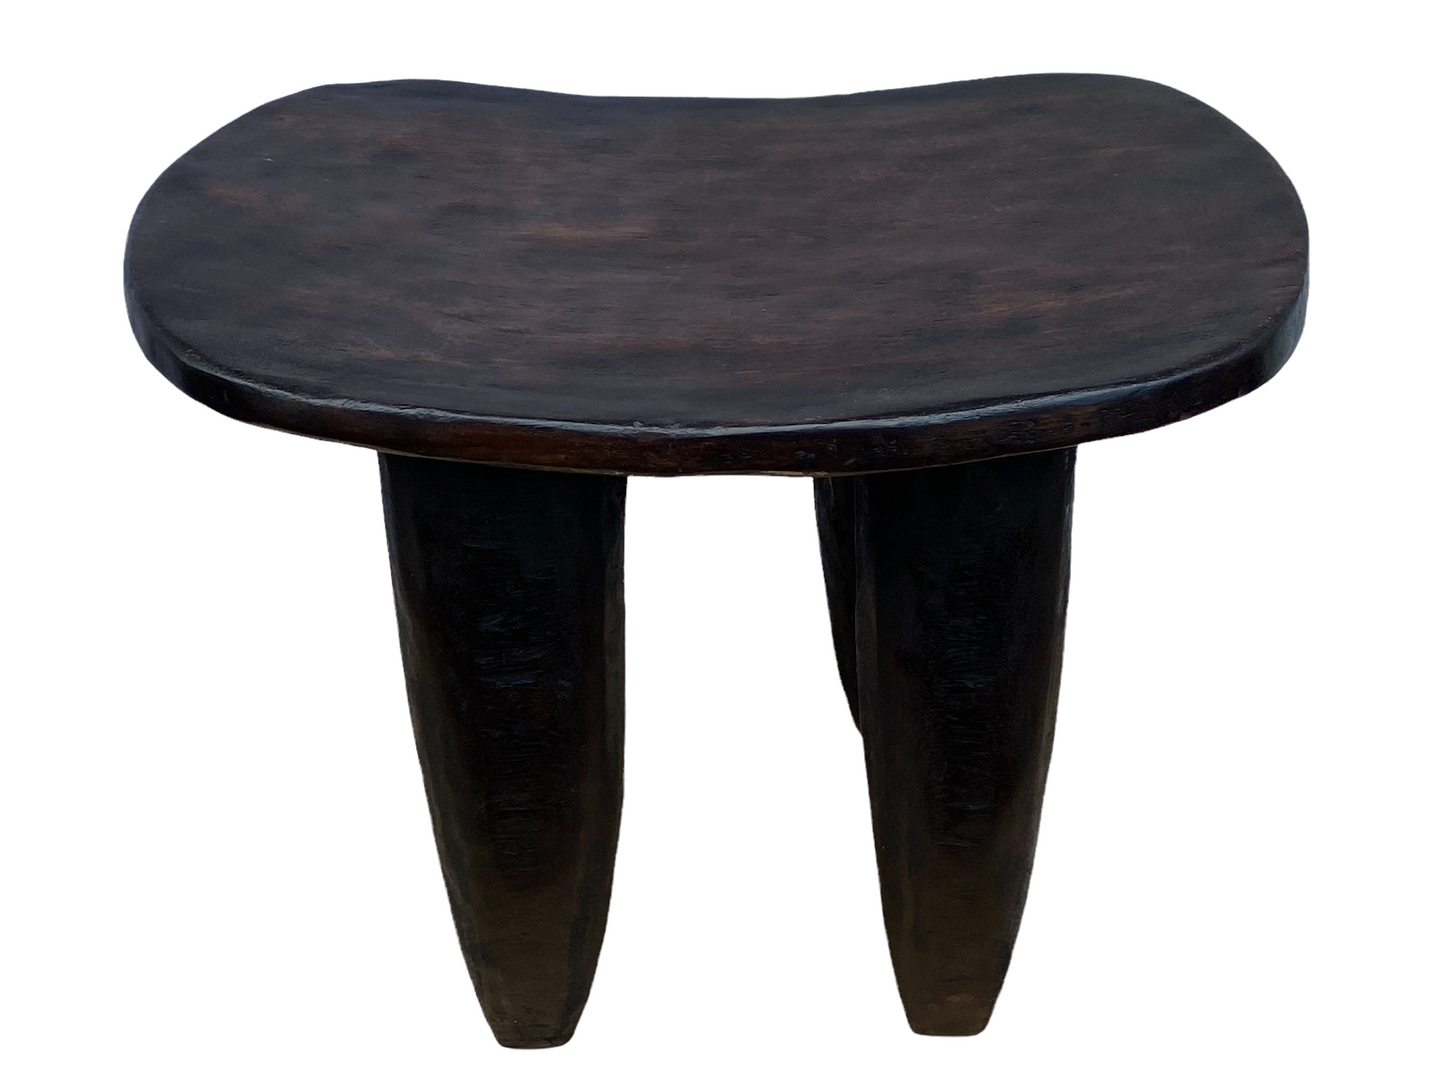 # 4671 Superb LG African Senufo Stool / Table  I coast 16.5" H by 22" w